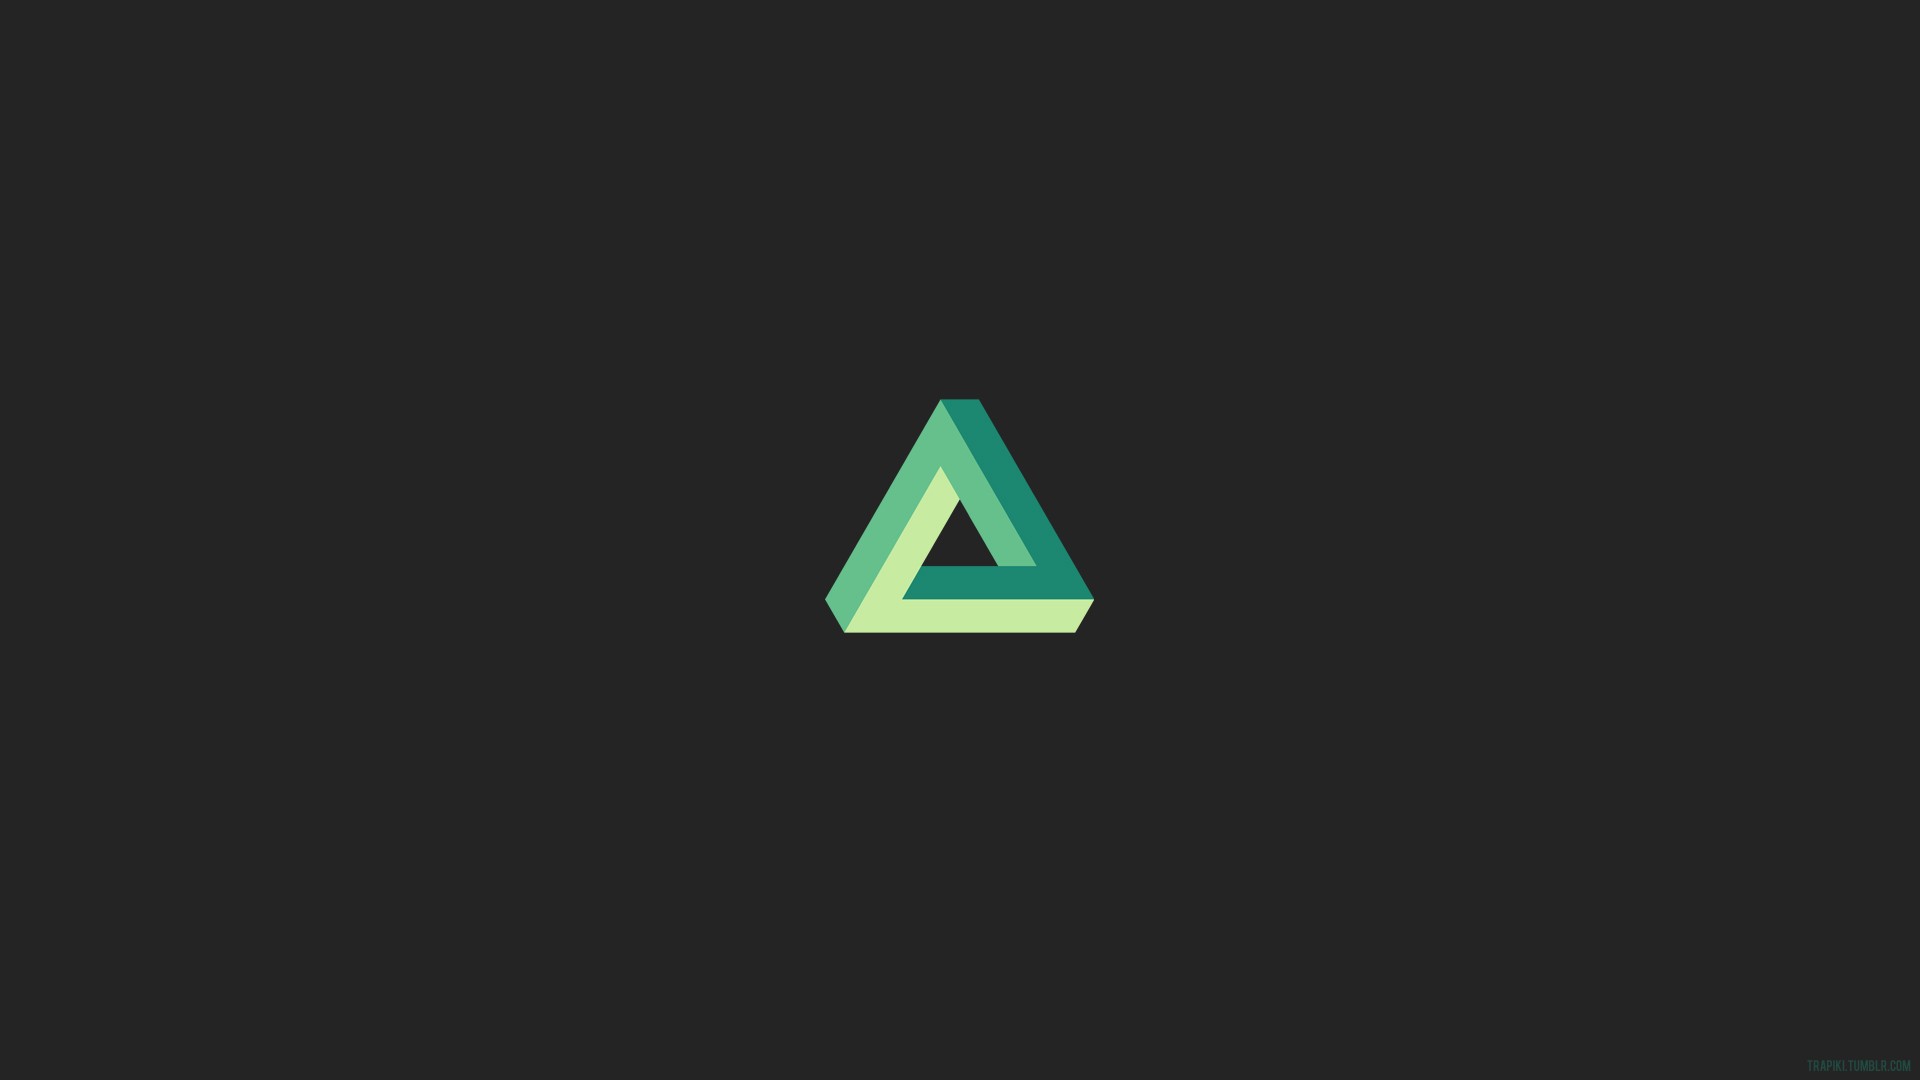 General 1920x1080 Penrose triangle triangle minimalism gray simple background digital art green